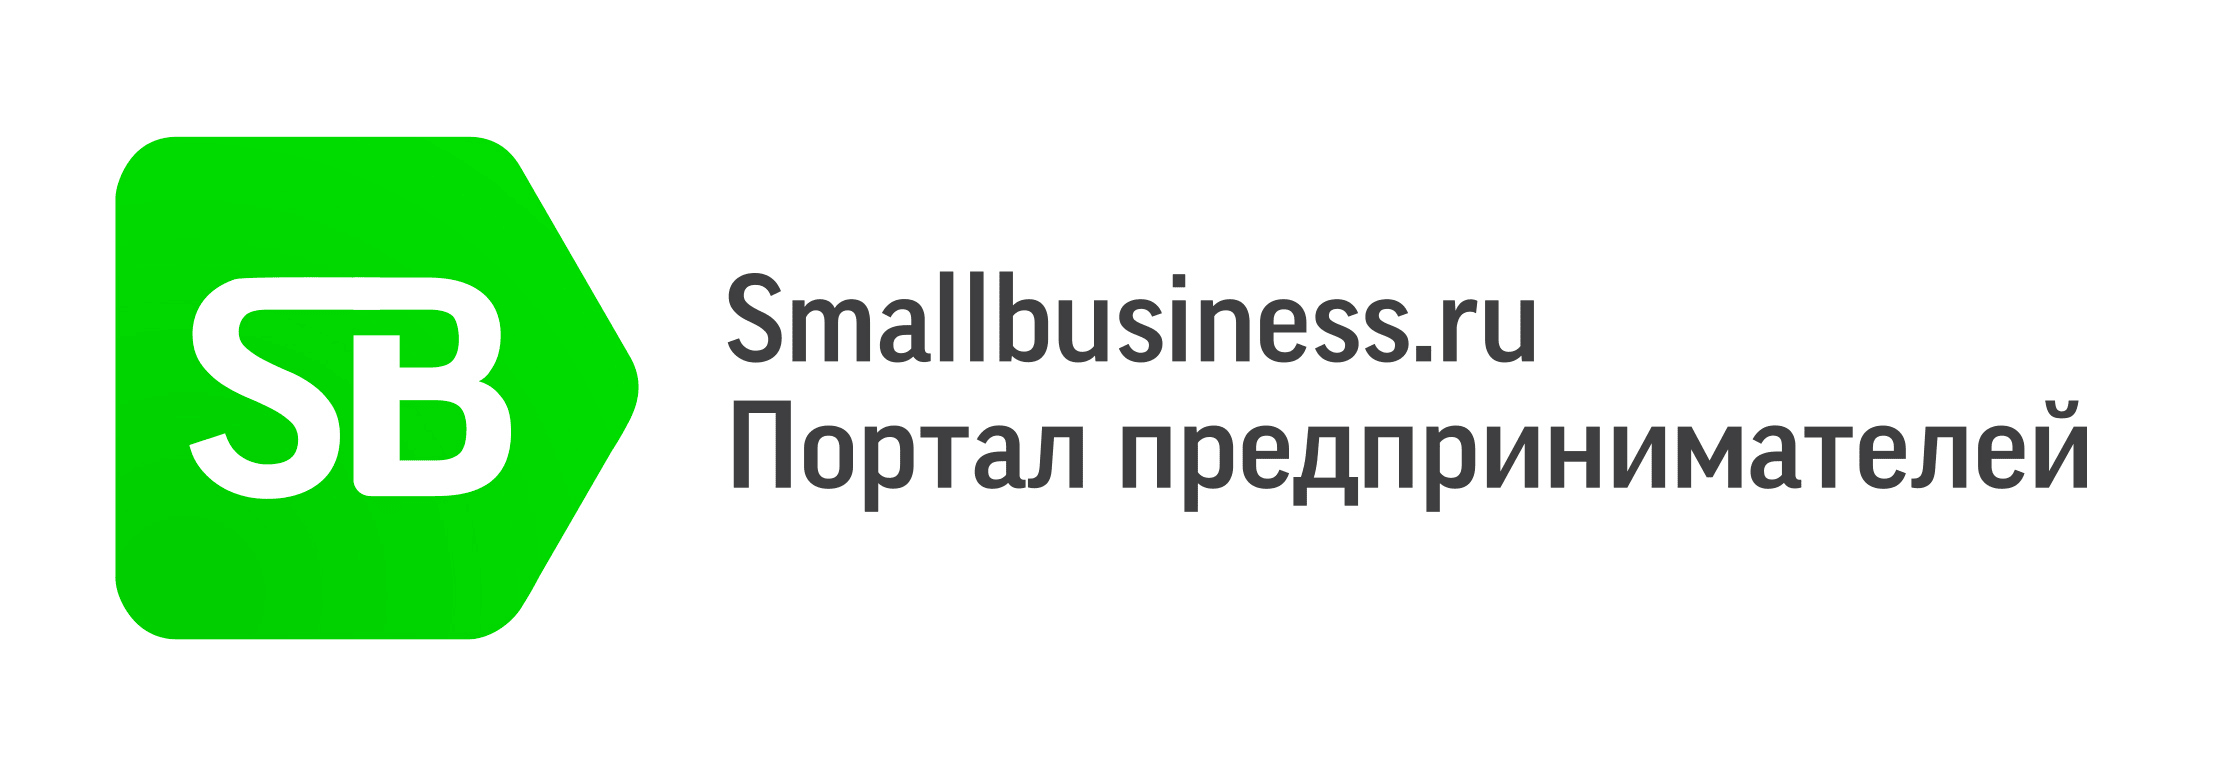 https://smallbusiness.ru/